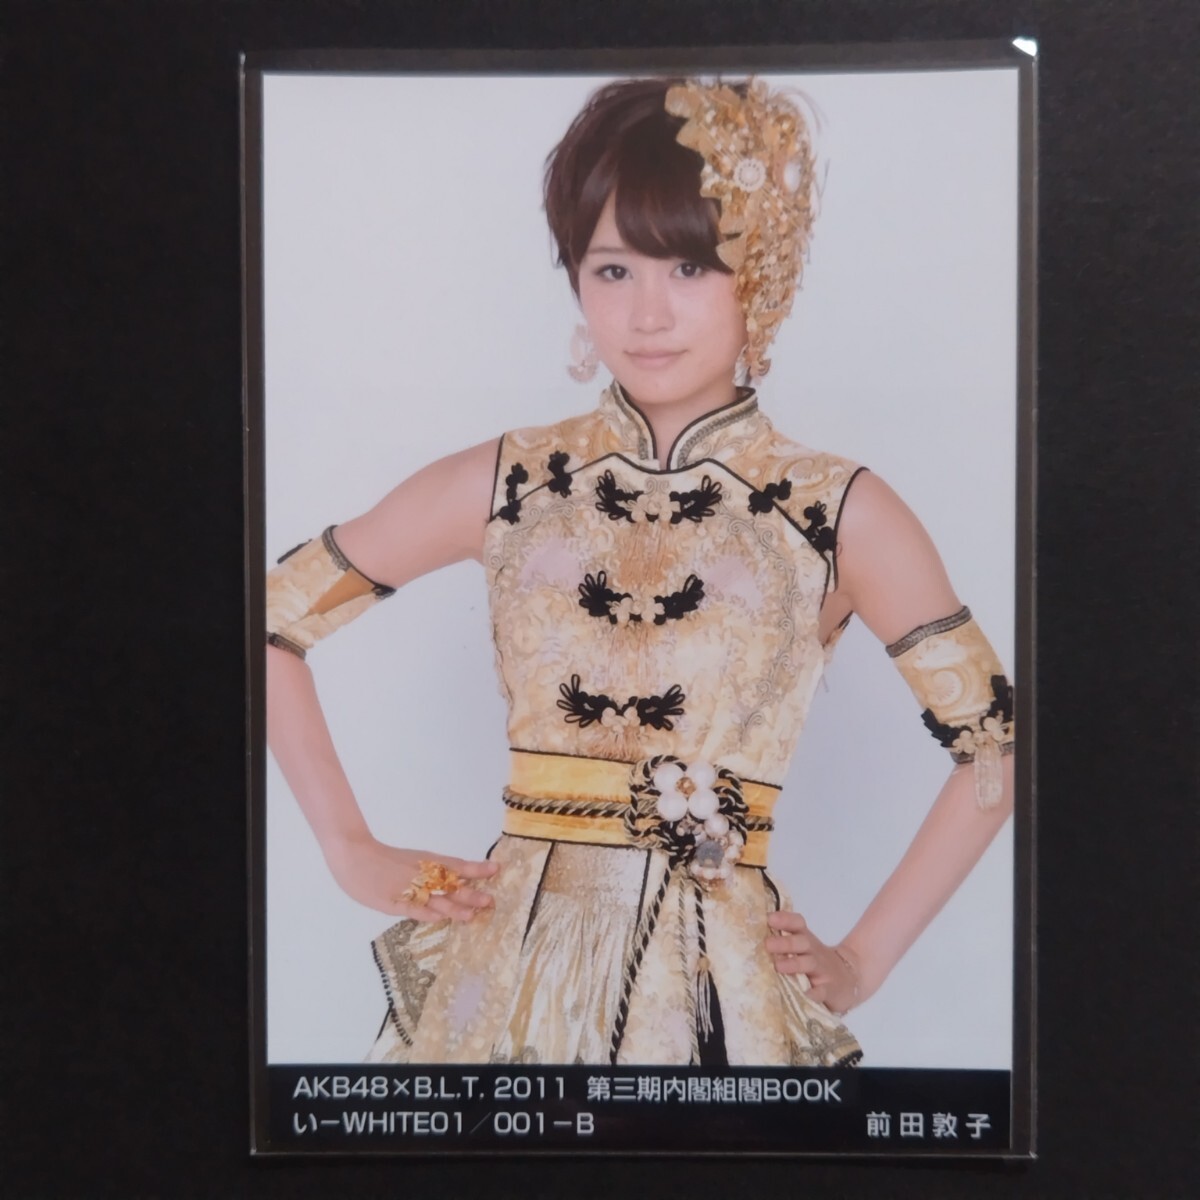 AKB48 生写真 AKB48×B.L.T. 2011 第三期内閣組閣BOOK WHITE B 前田敦子_画像1